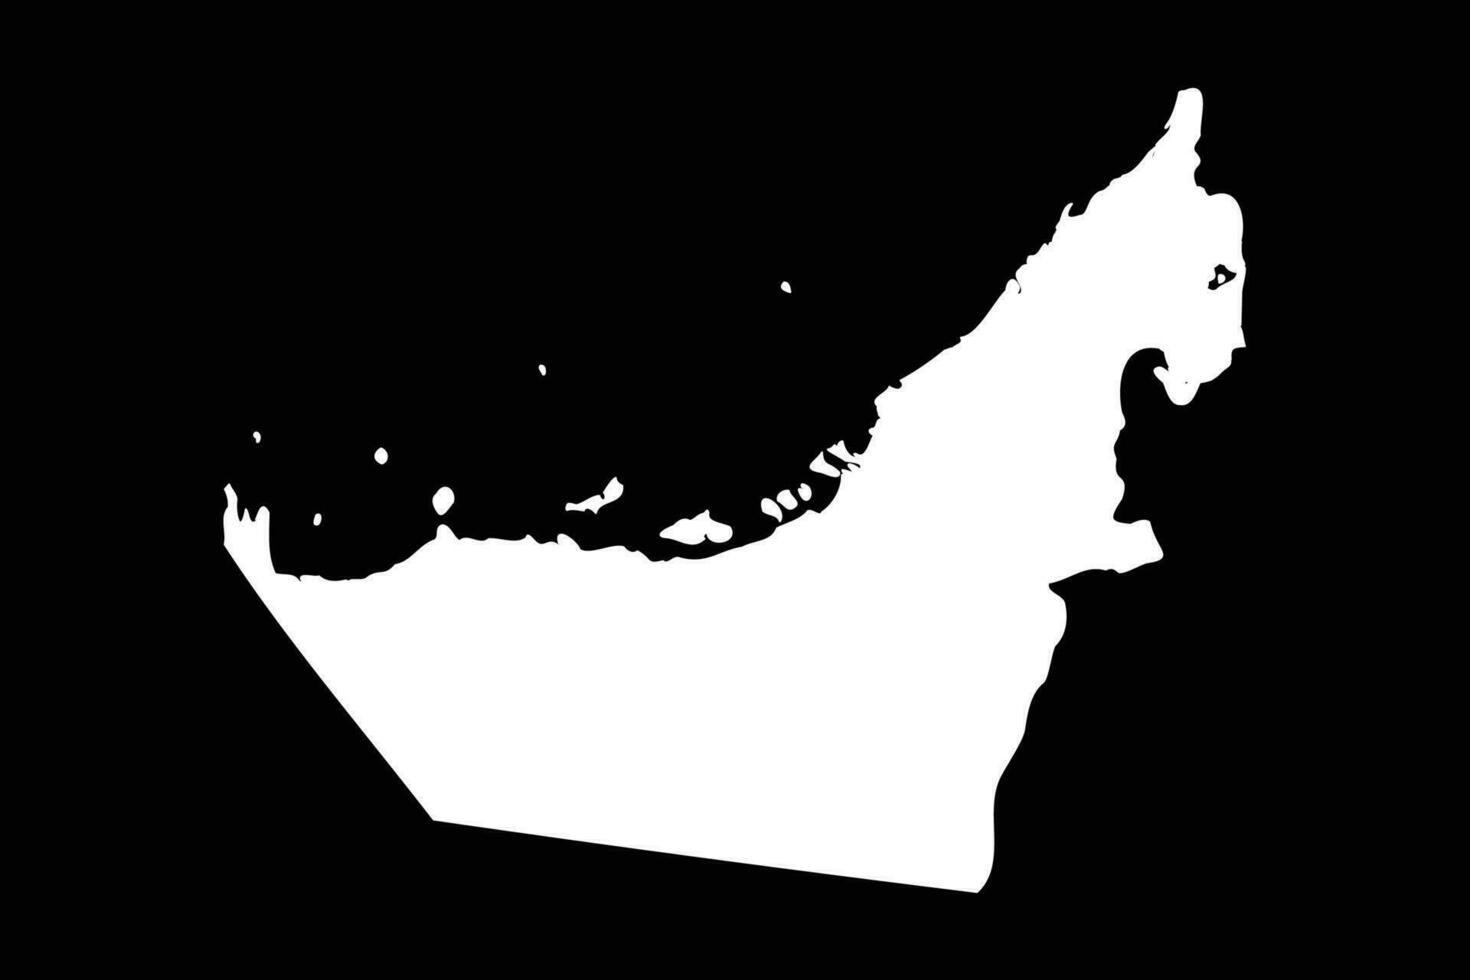 Simple United Arab Emirates Map Isolated on Black Background vector